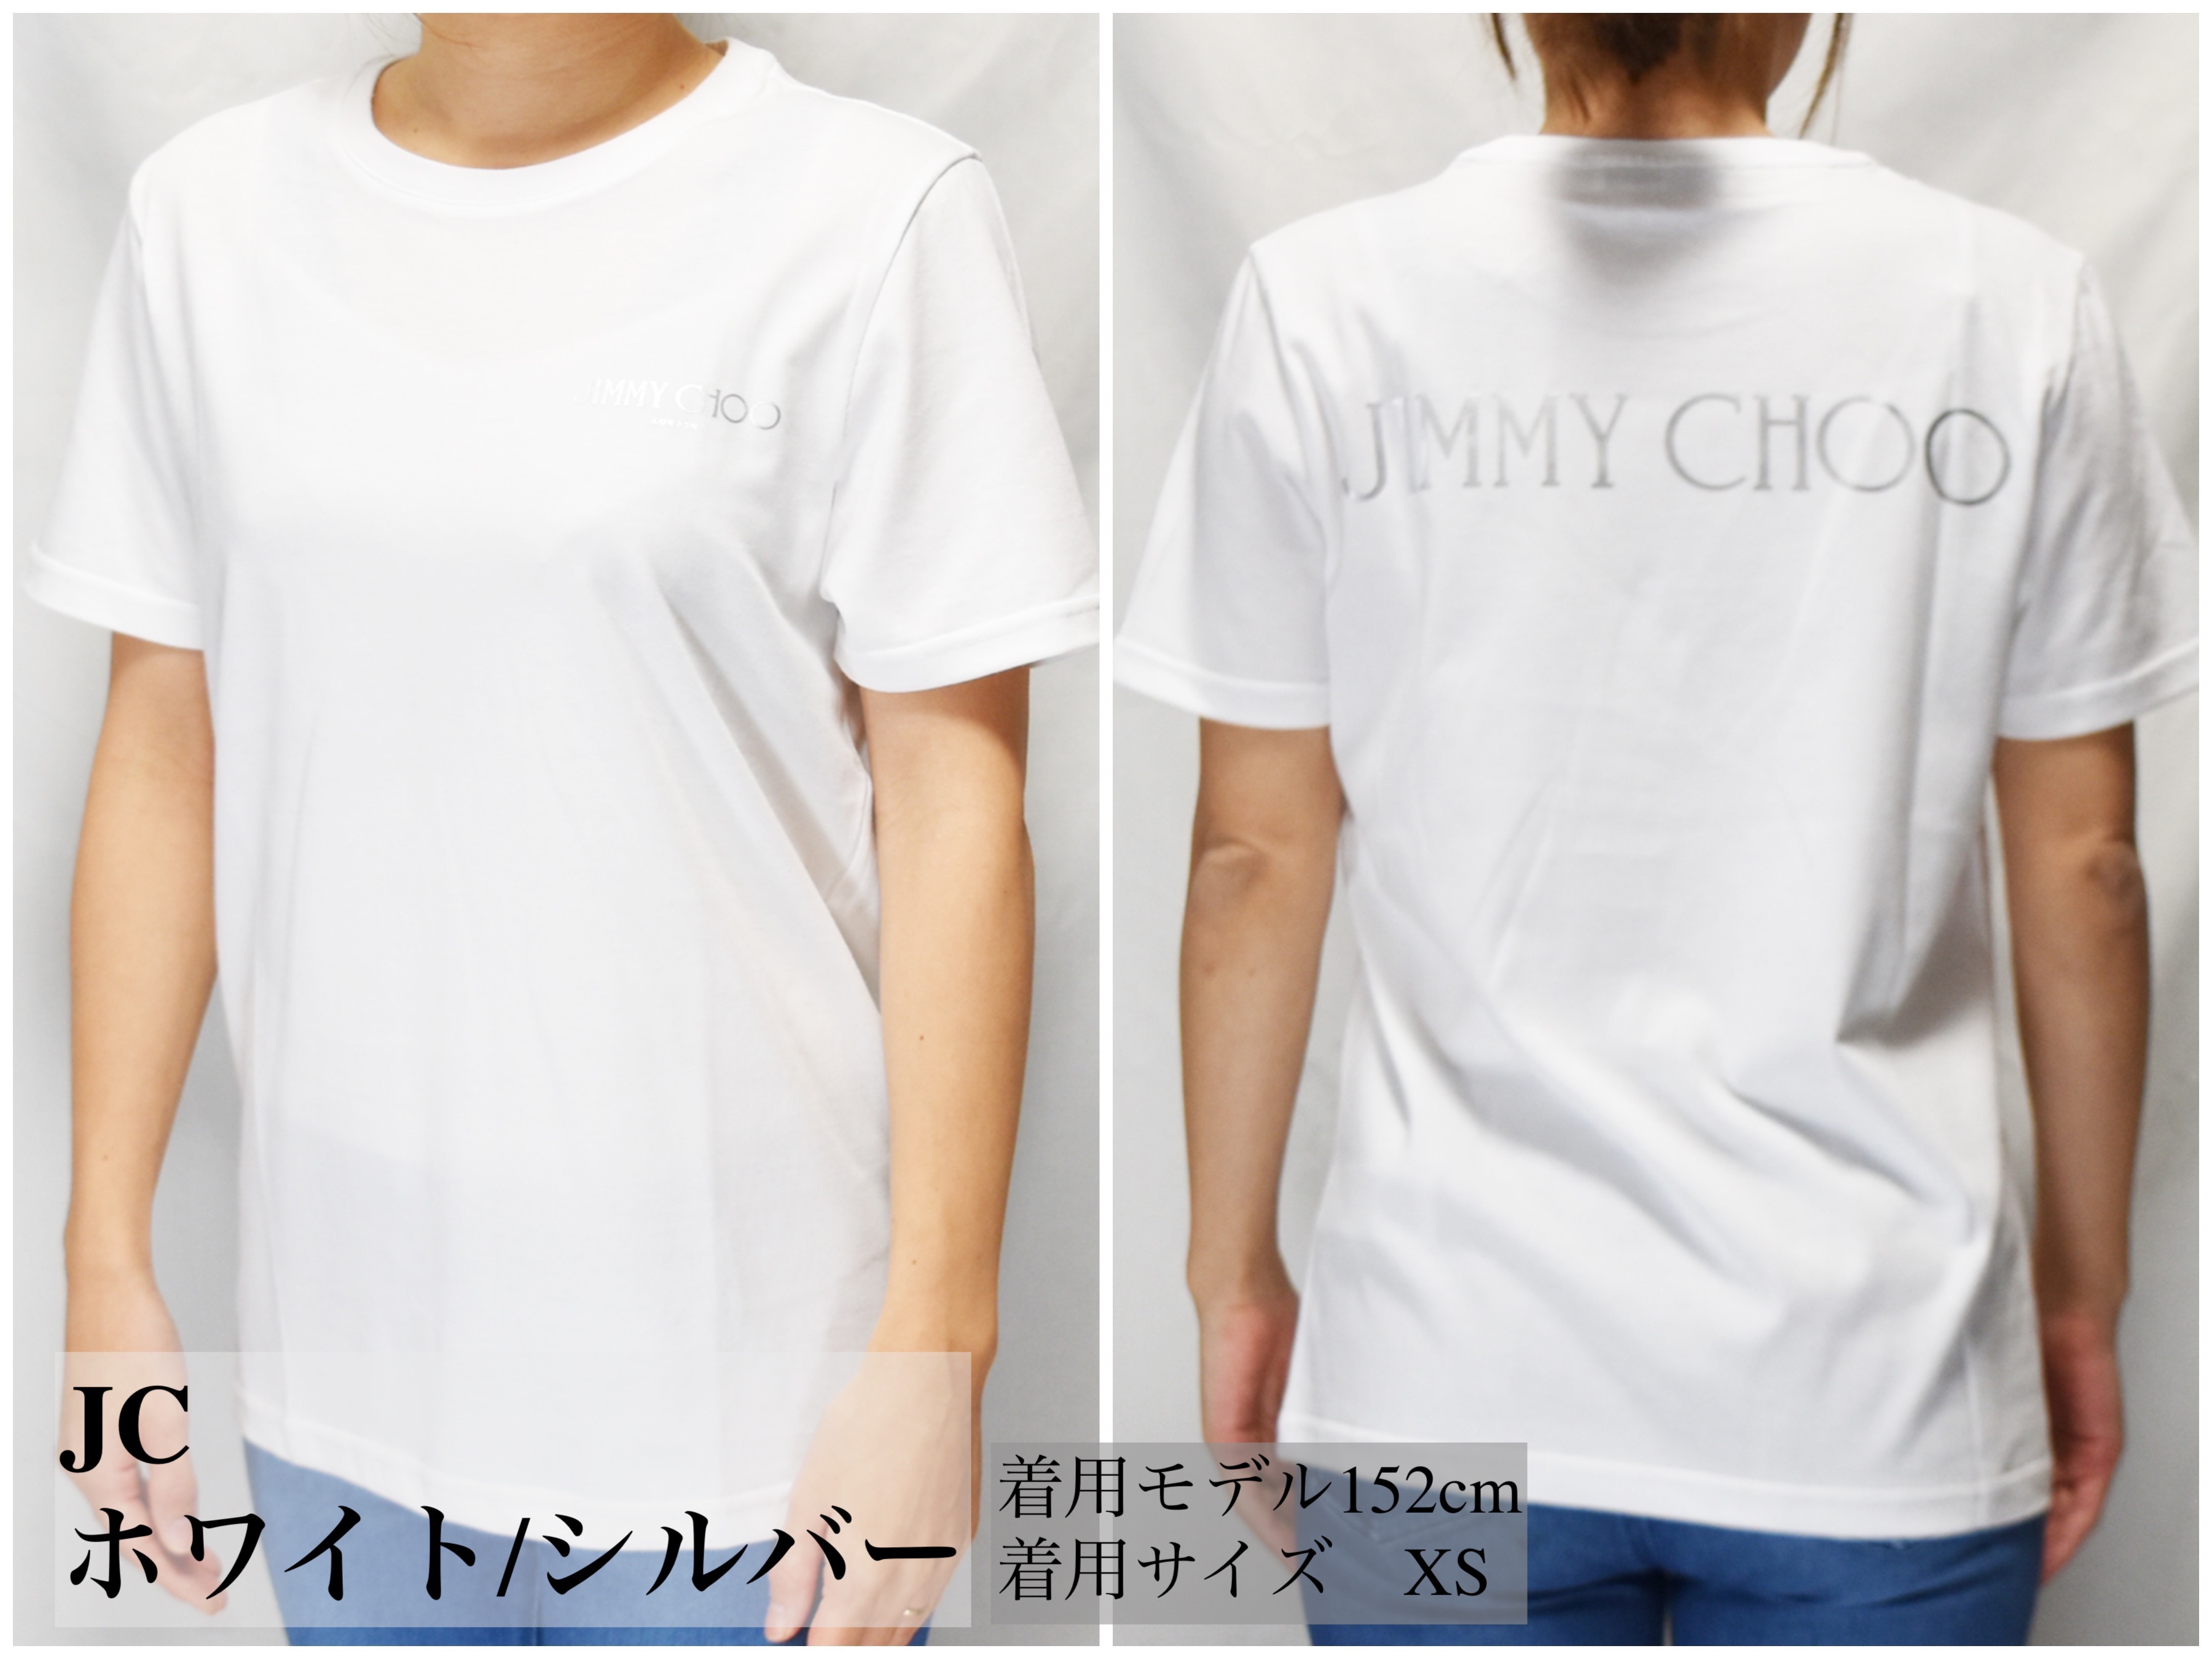 Jimmy Choo Tシャツ